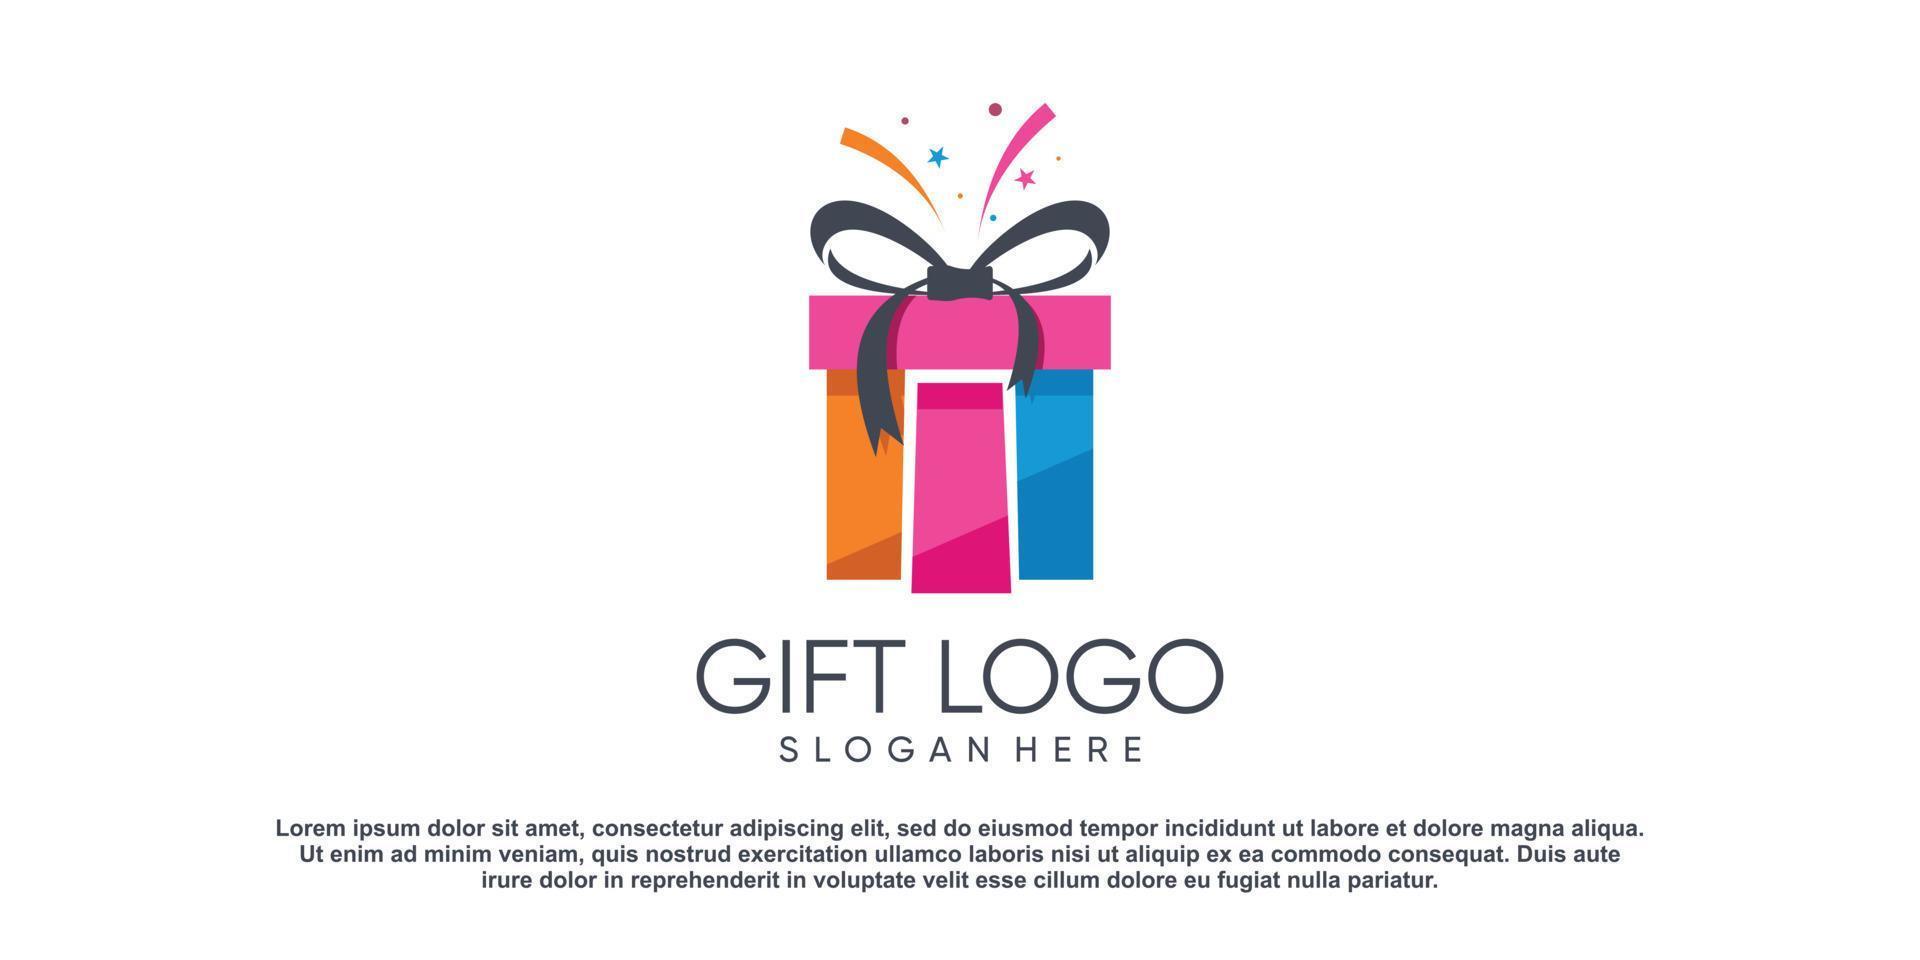 Gift logo design vector with modern creative concept style